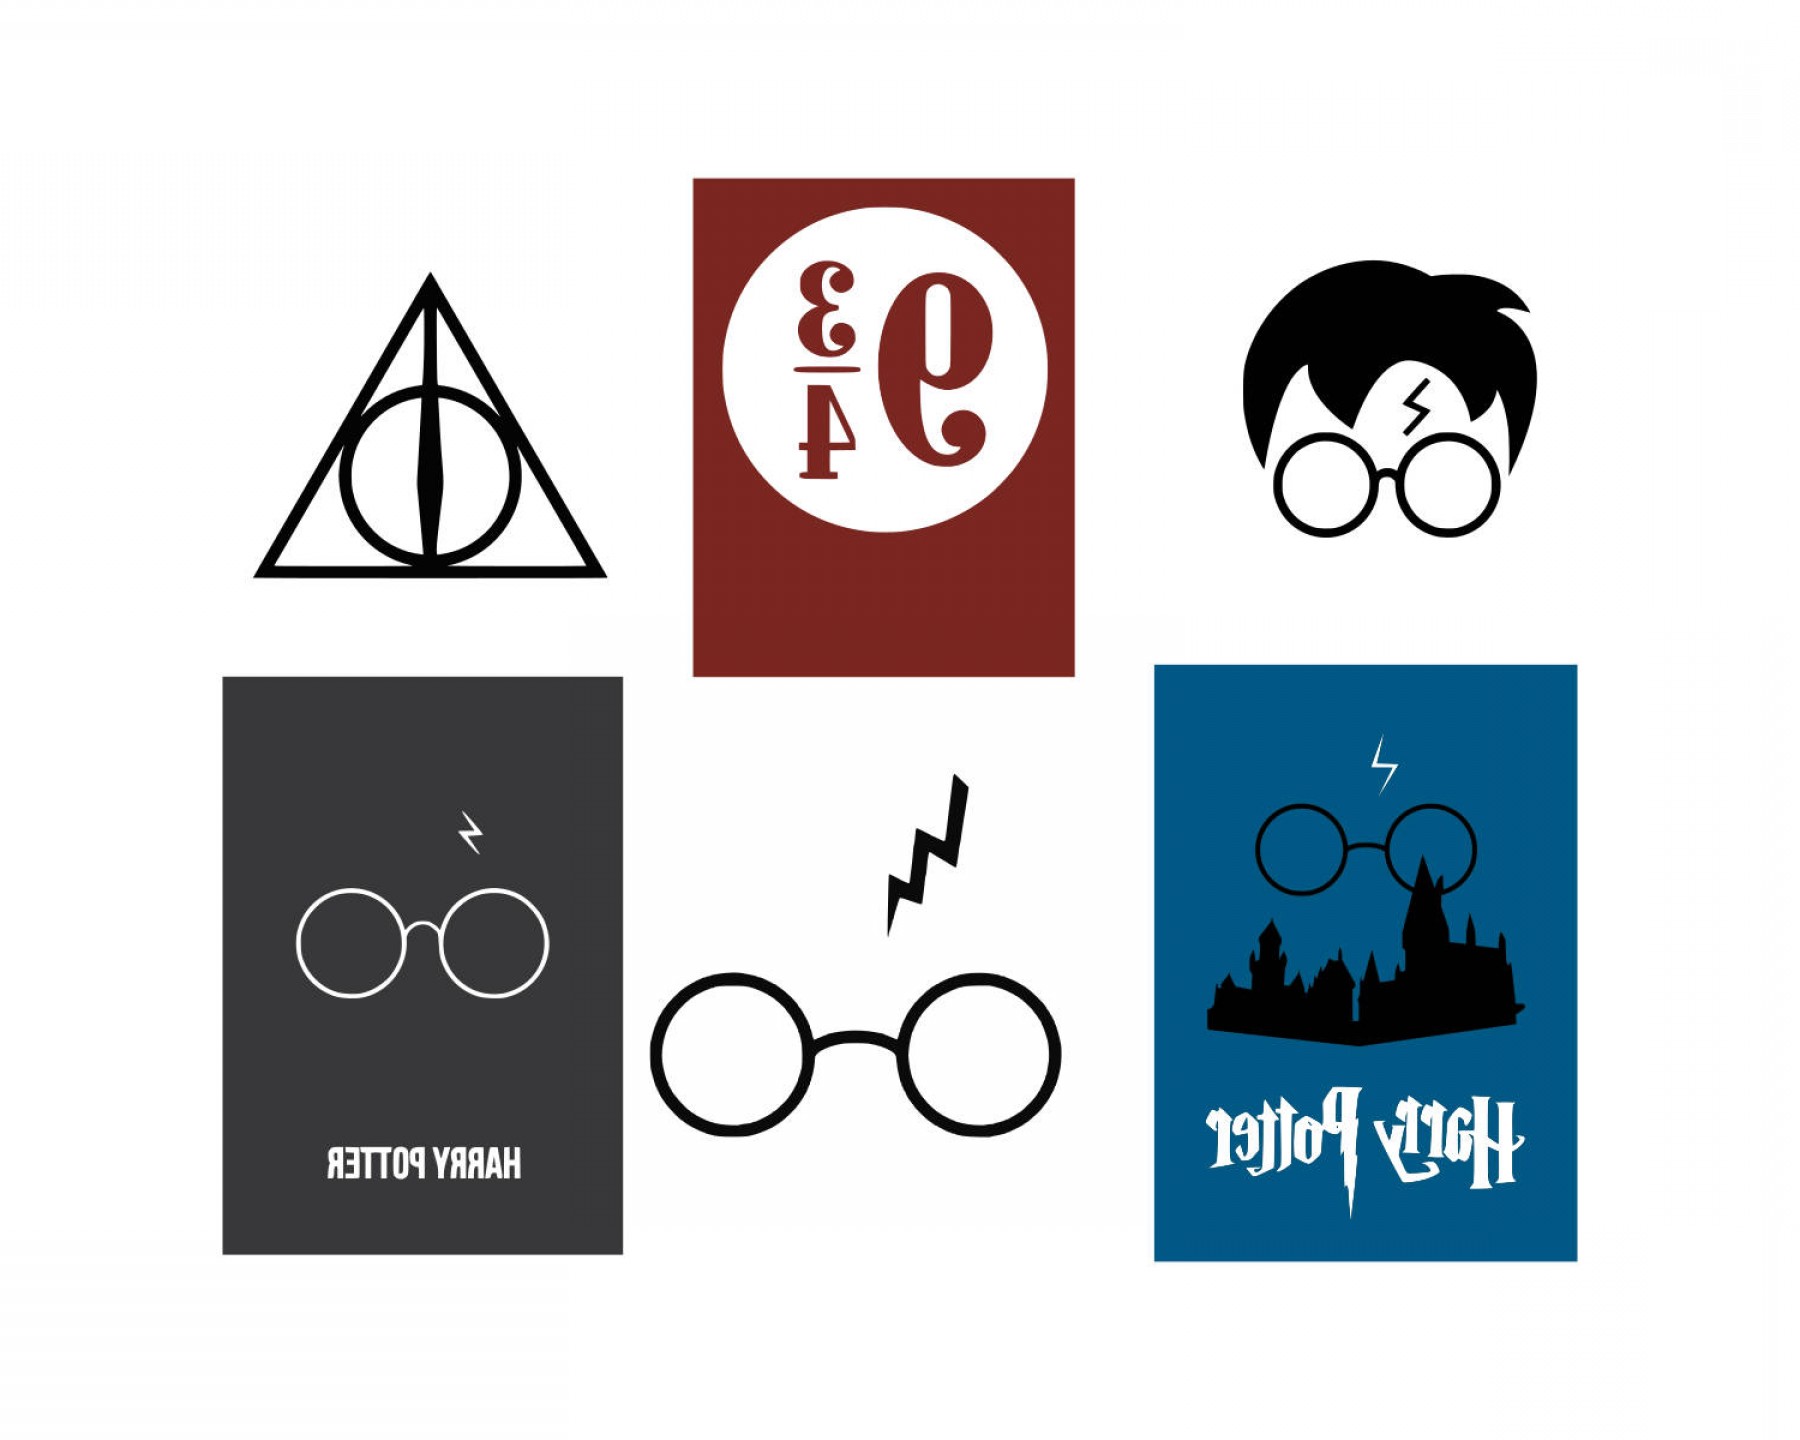 Download Harry Potter Glasses Vector at Vectorified.com ...